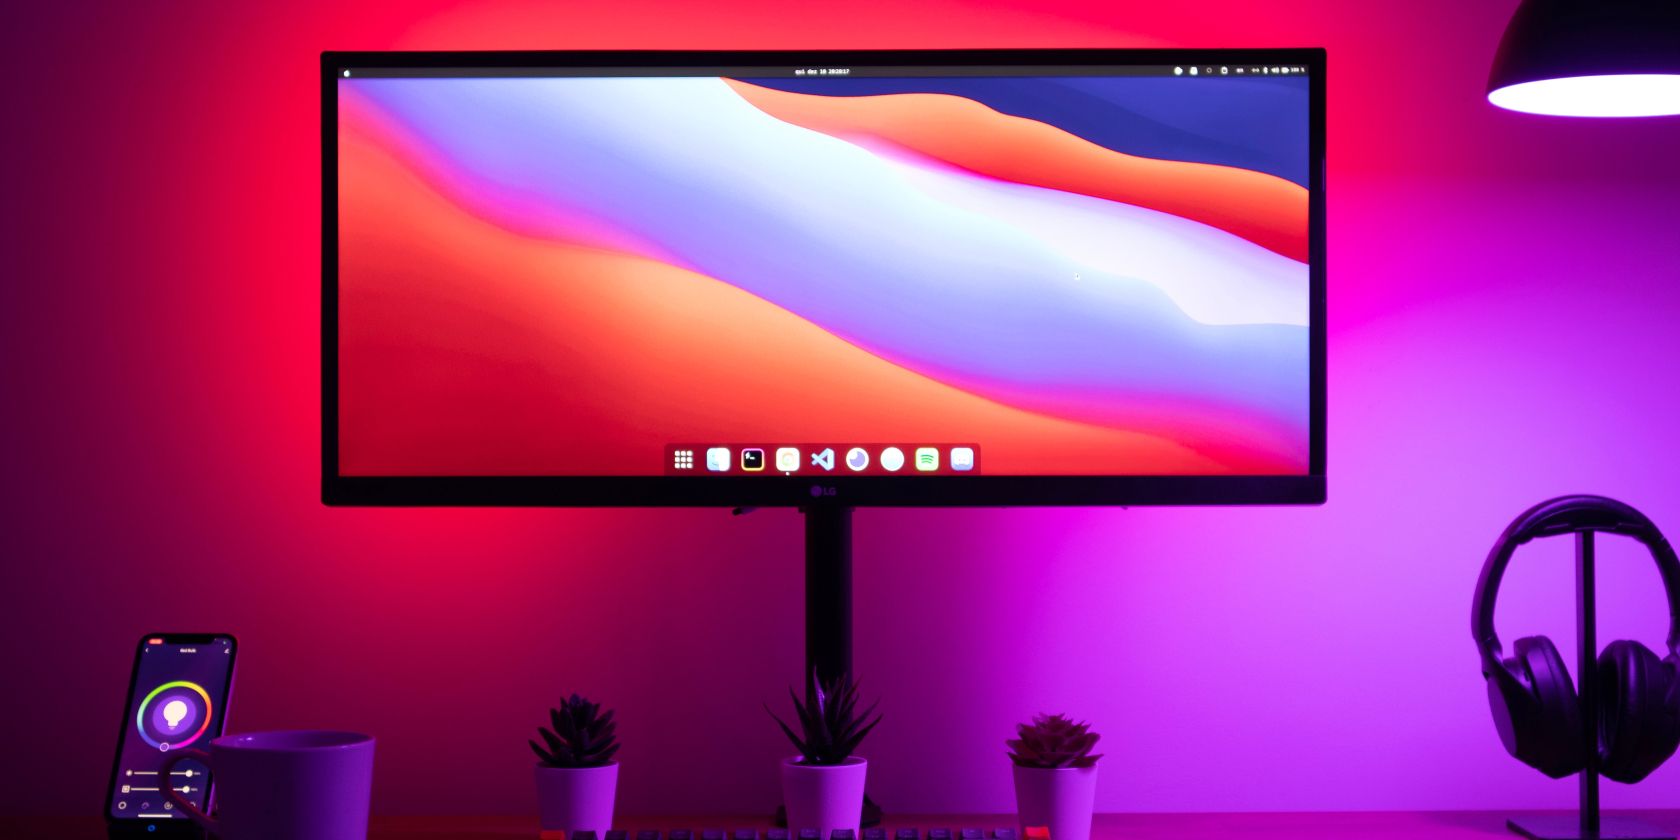 RGB lights against a wall behind a monitor